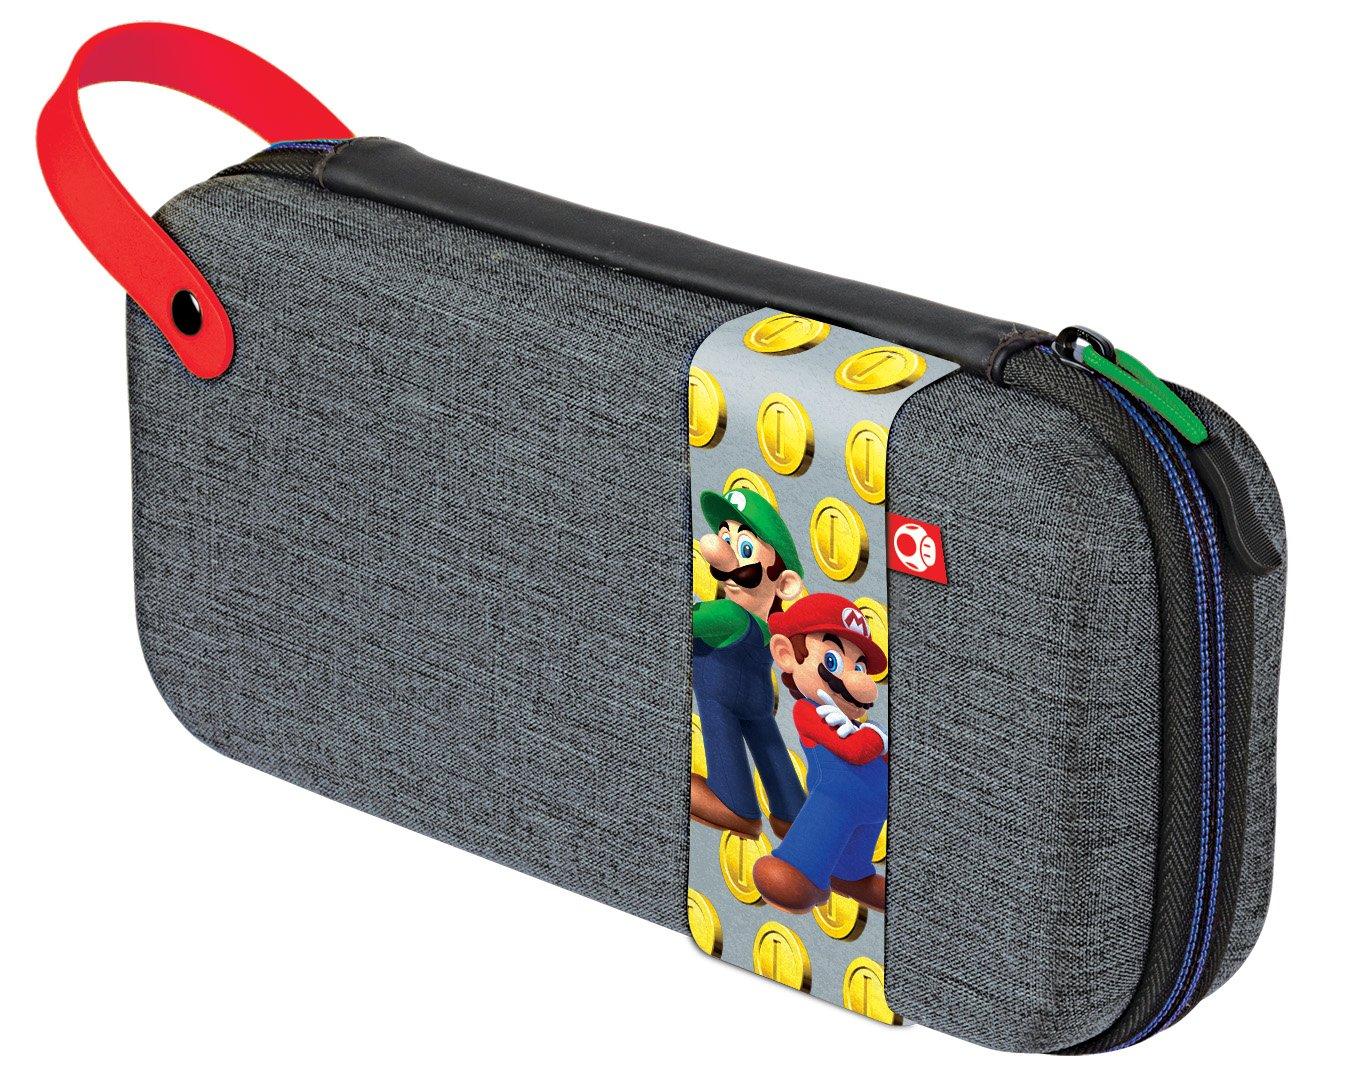 Super Mario Bros. Mario and Luigi Deluxe Travel Case for Nintendo Switch